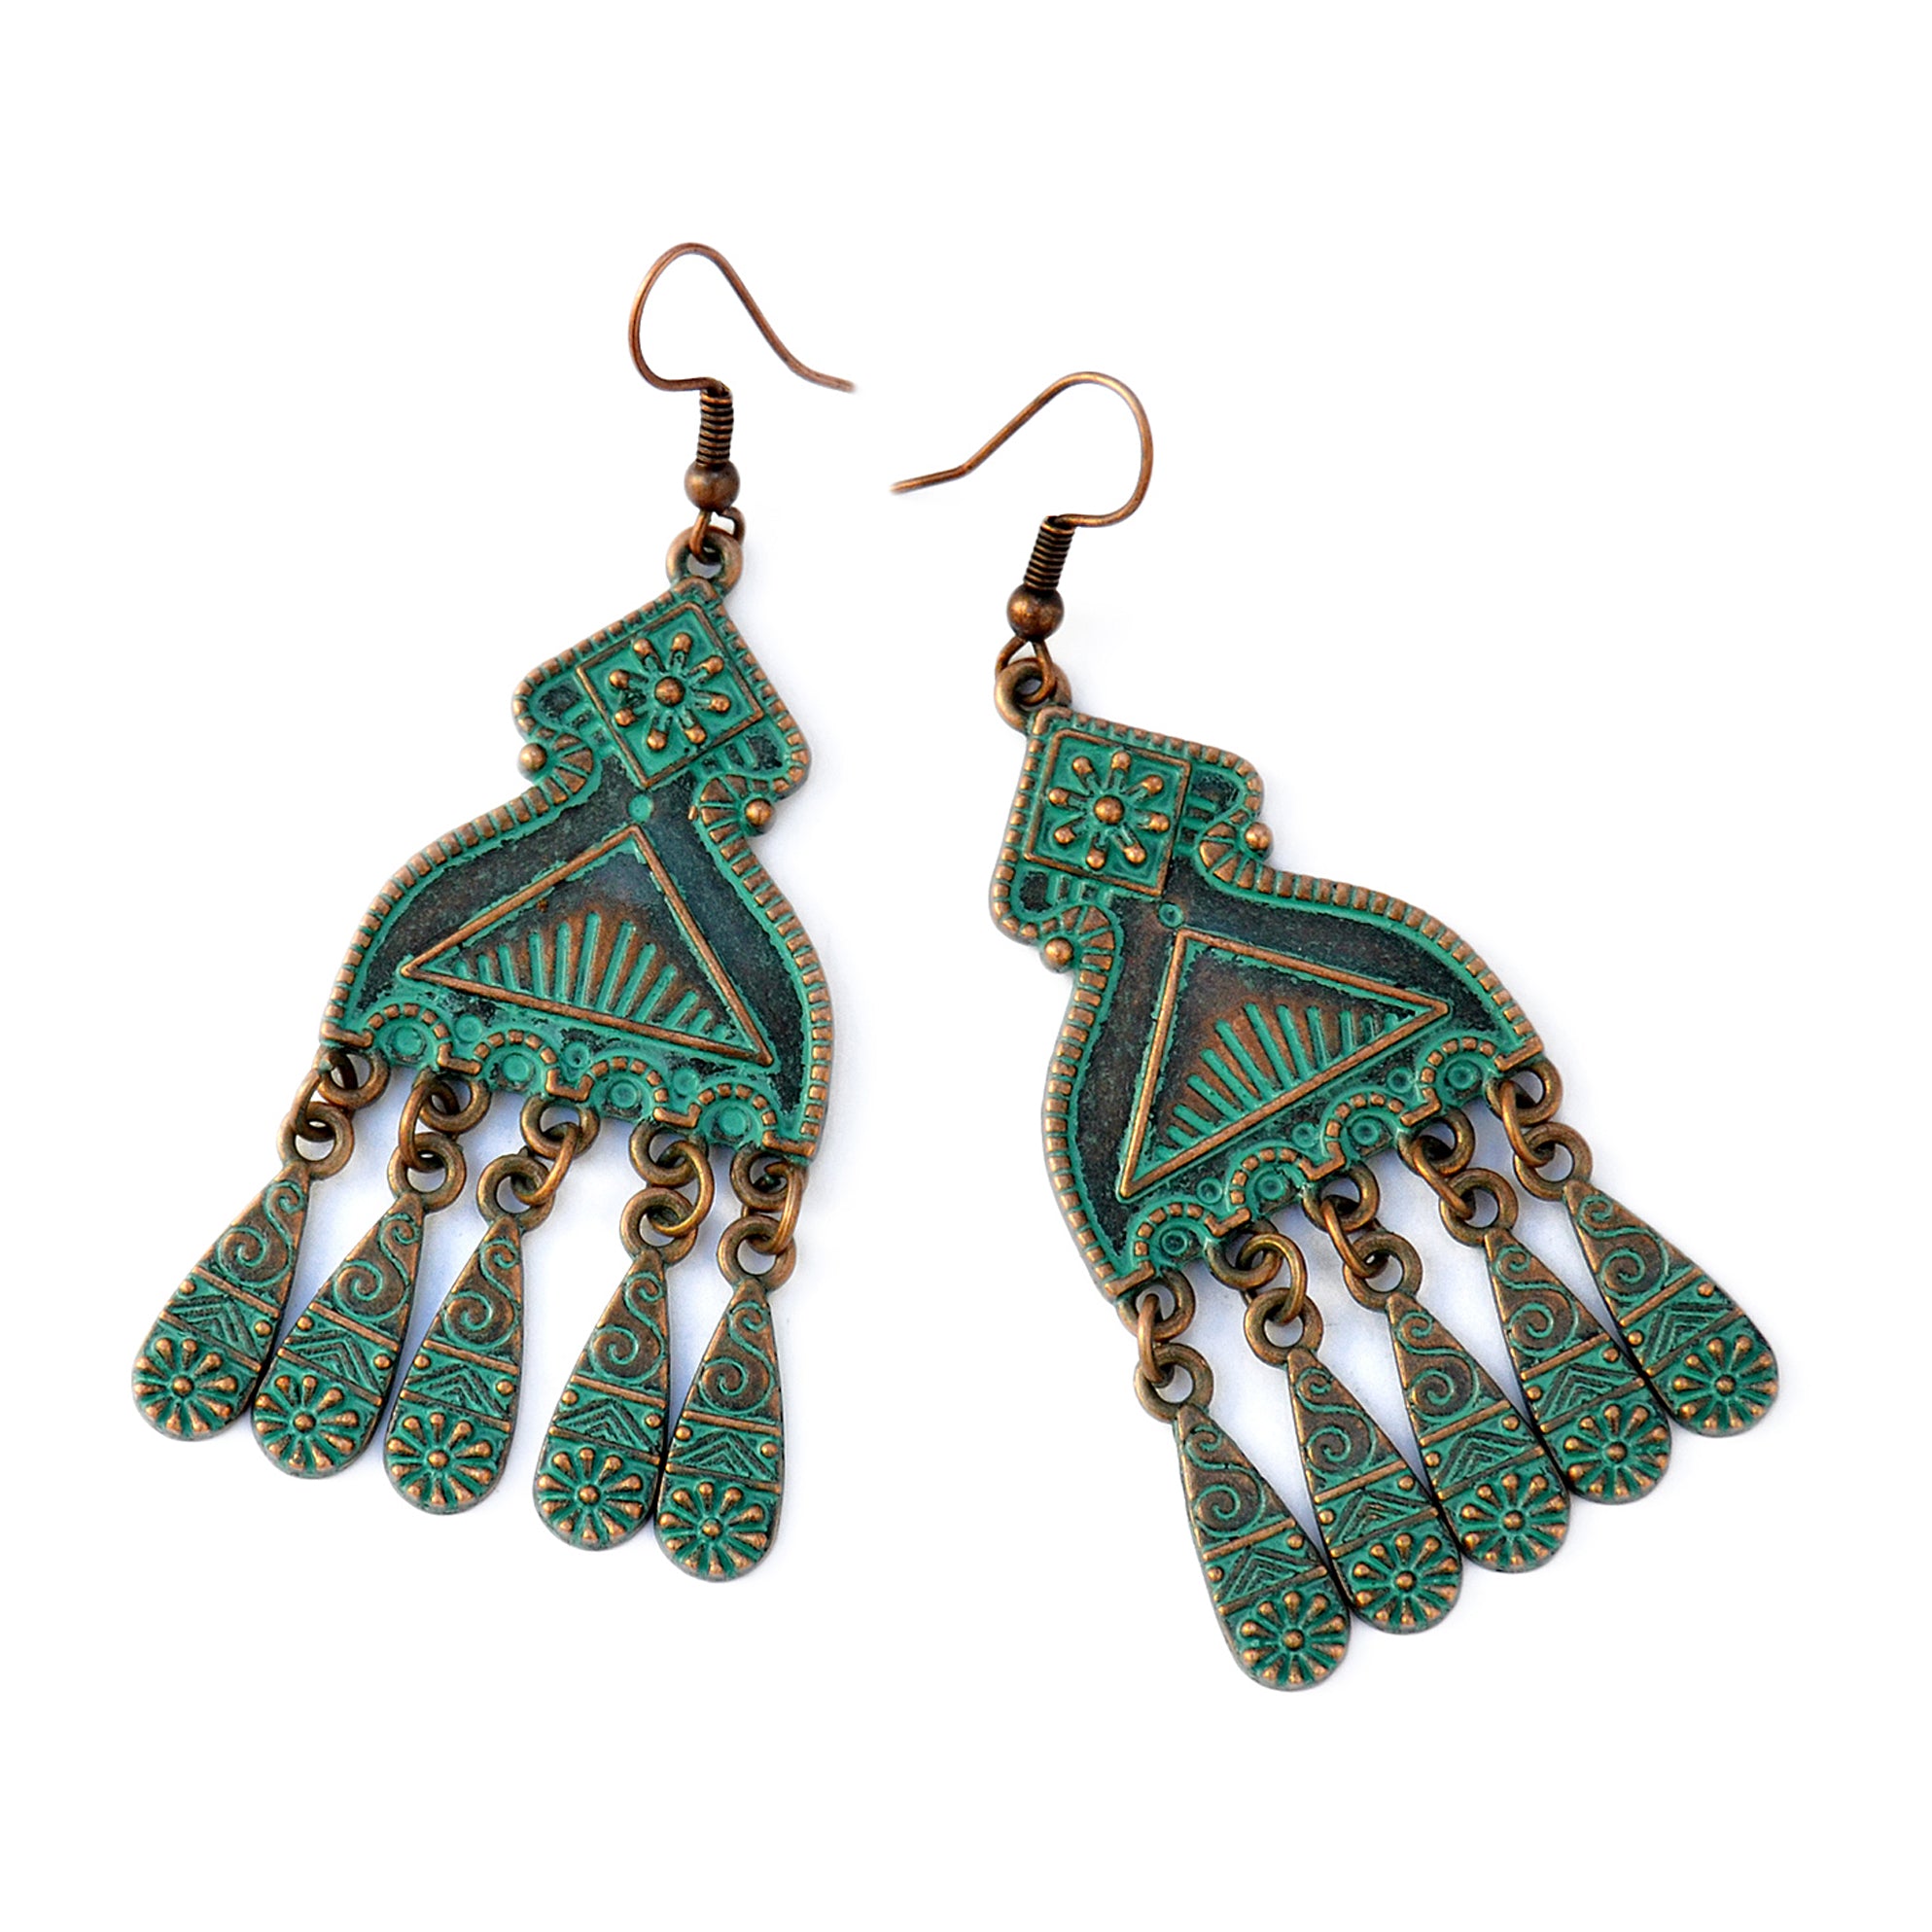 Ethnic verdigris oriental earrings